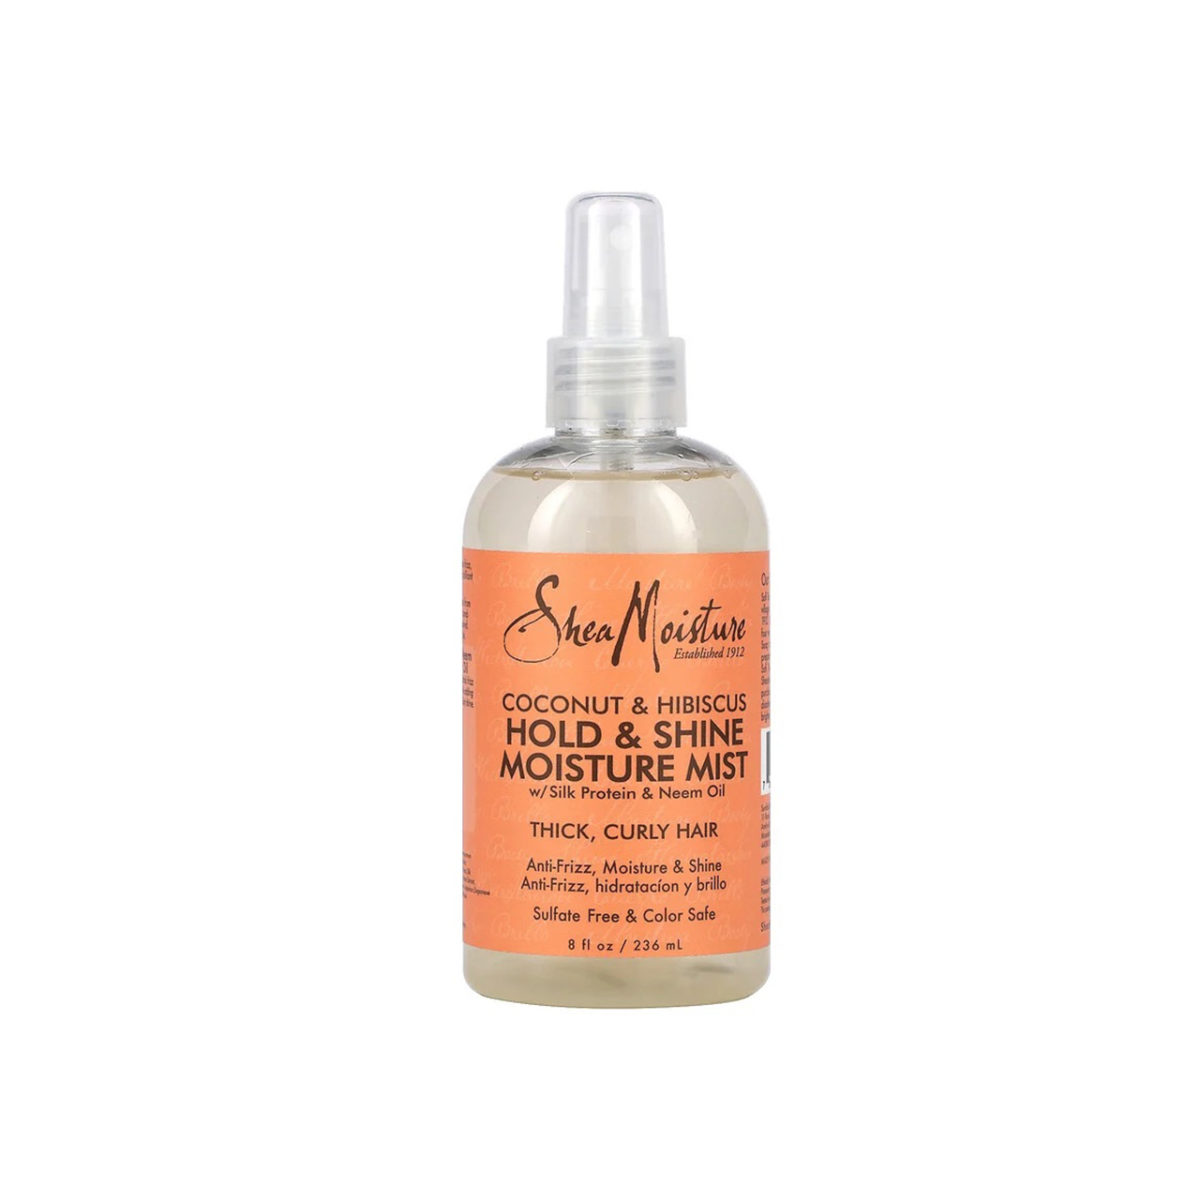 SheaMoisture - Hold & Shine Moisture Mist with Silk Protein & Neem Oil, Coconut & Hibiscus